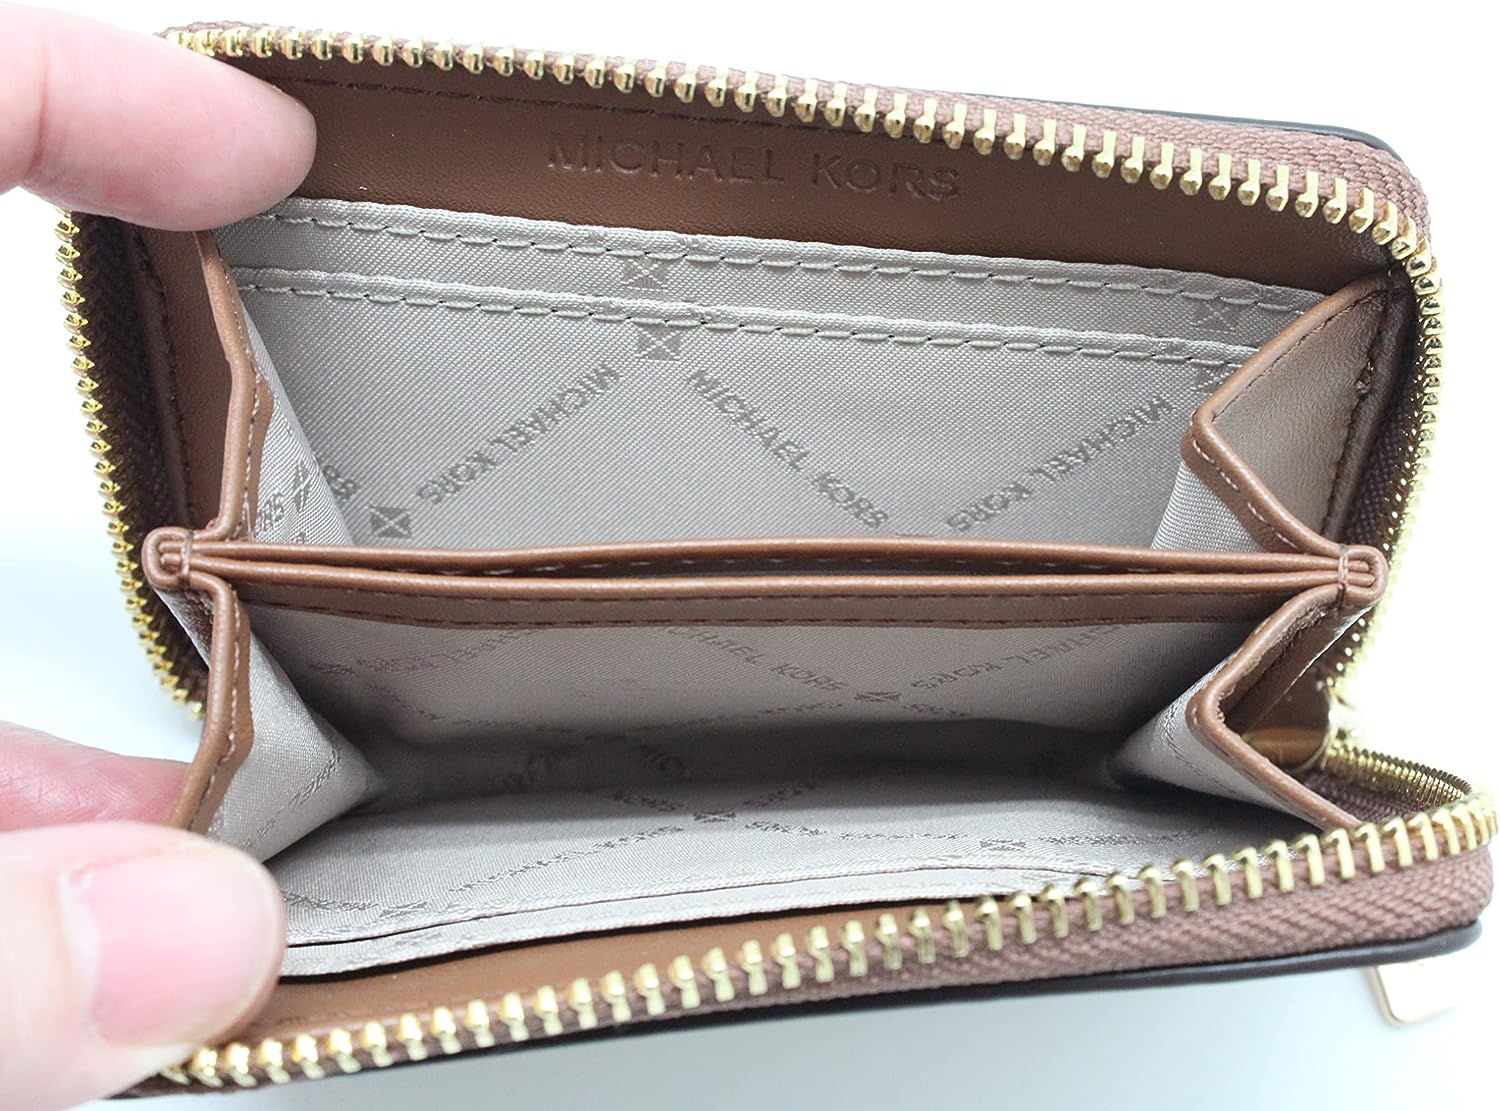 Michael Kors Jet Set Wallet – Ritzy Store